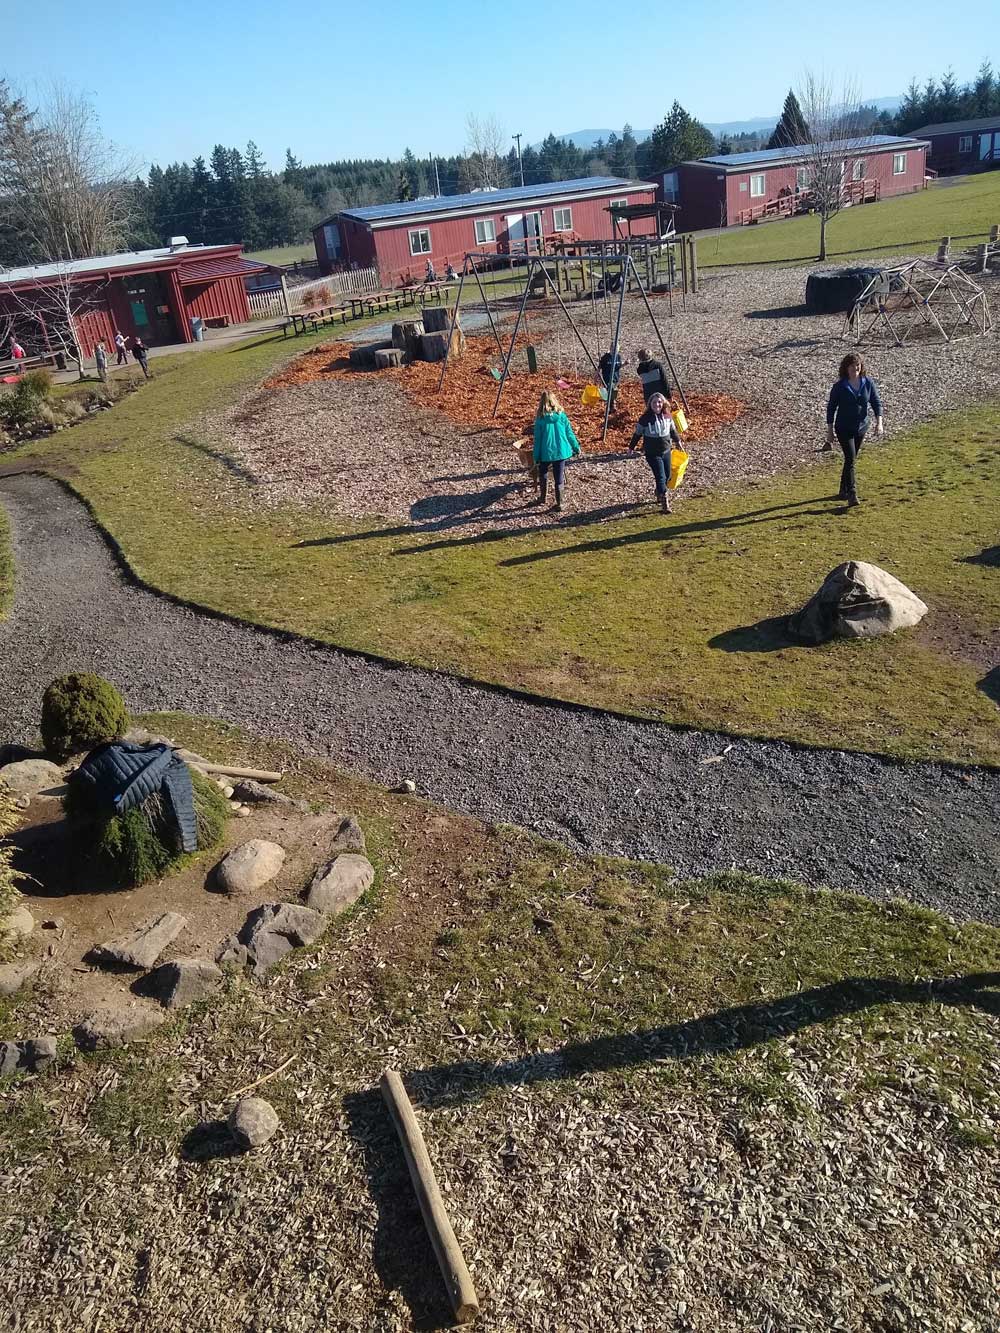 Springwater campus overhead shot, with kids on playground